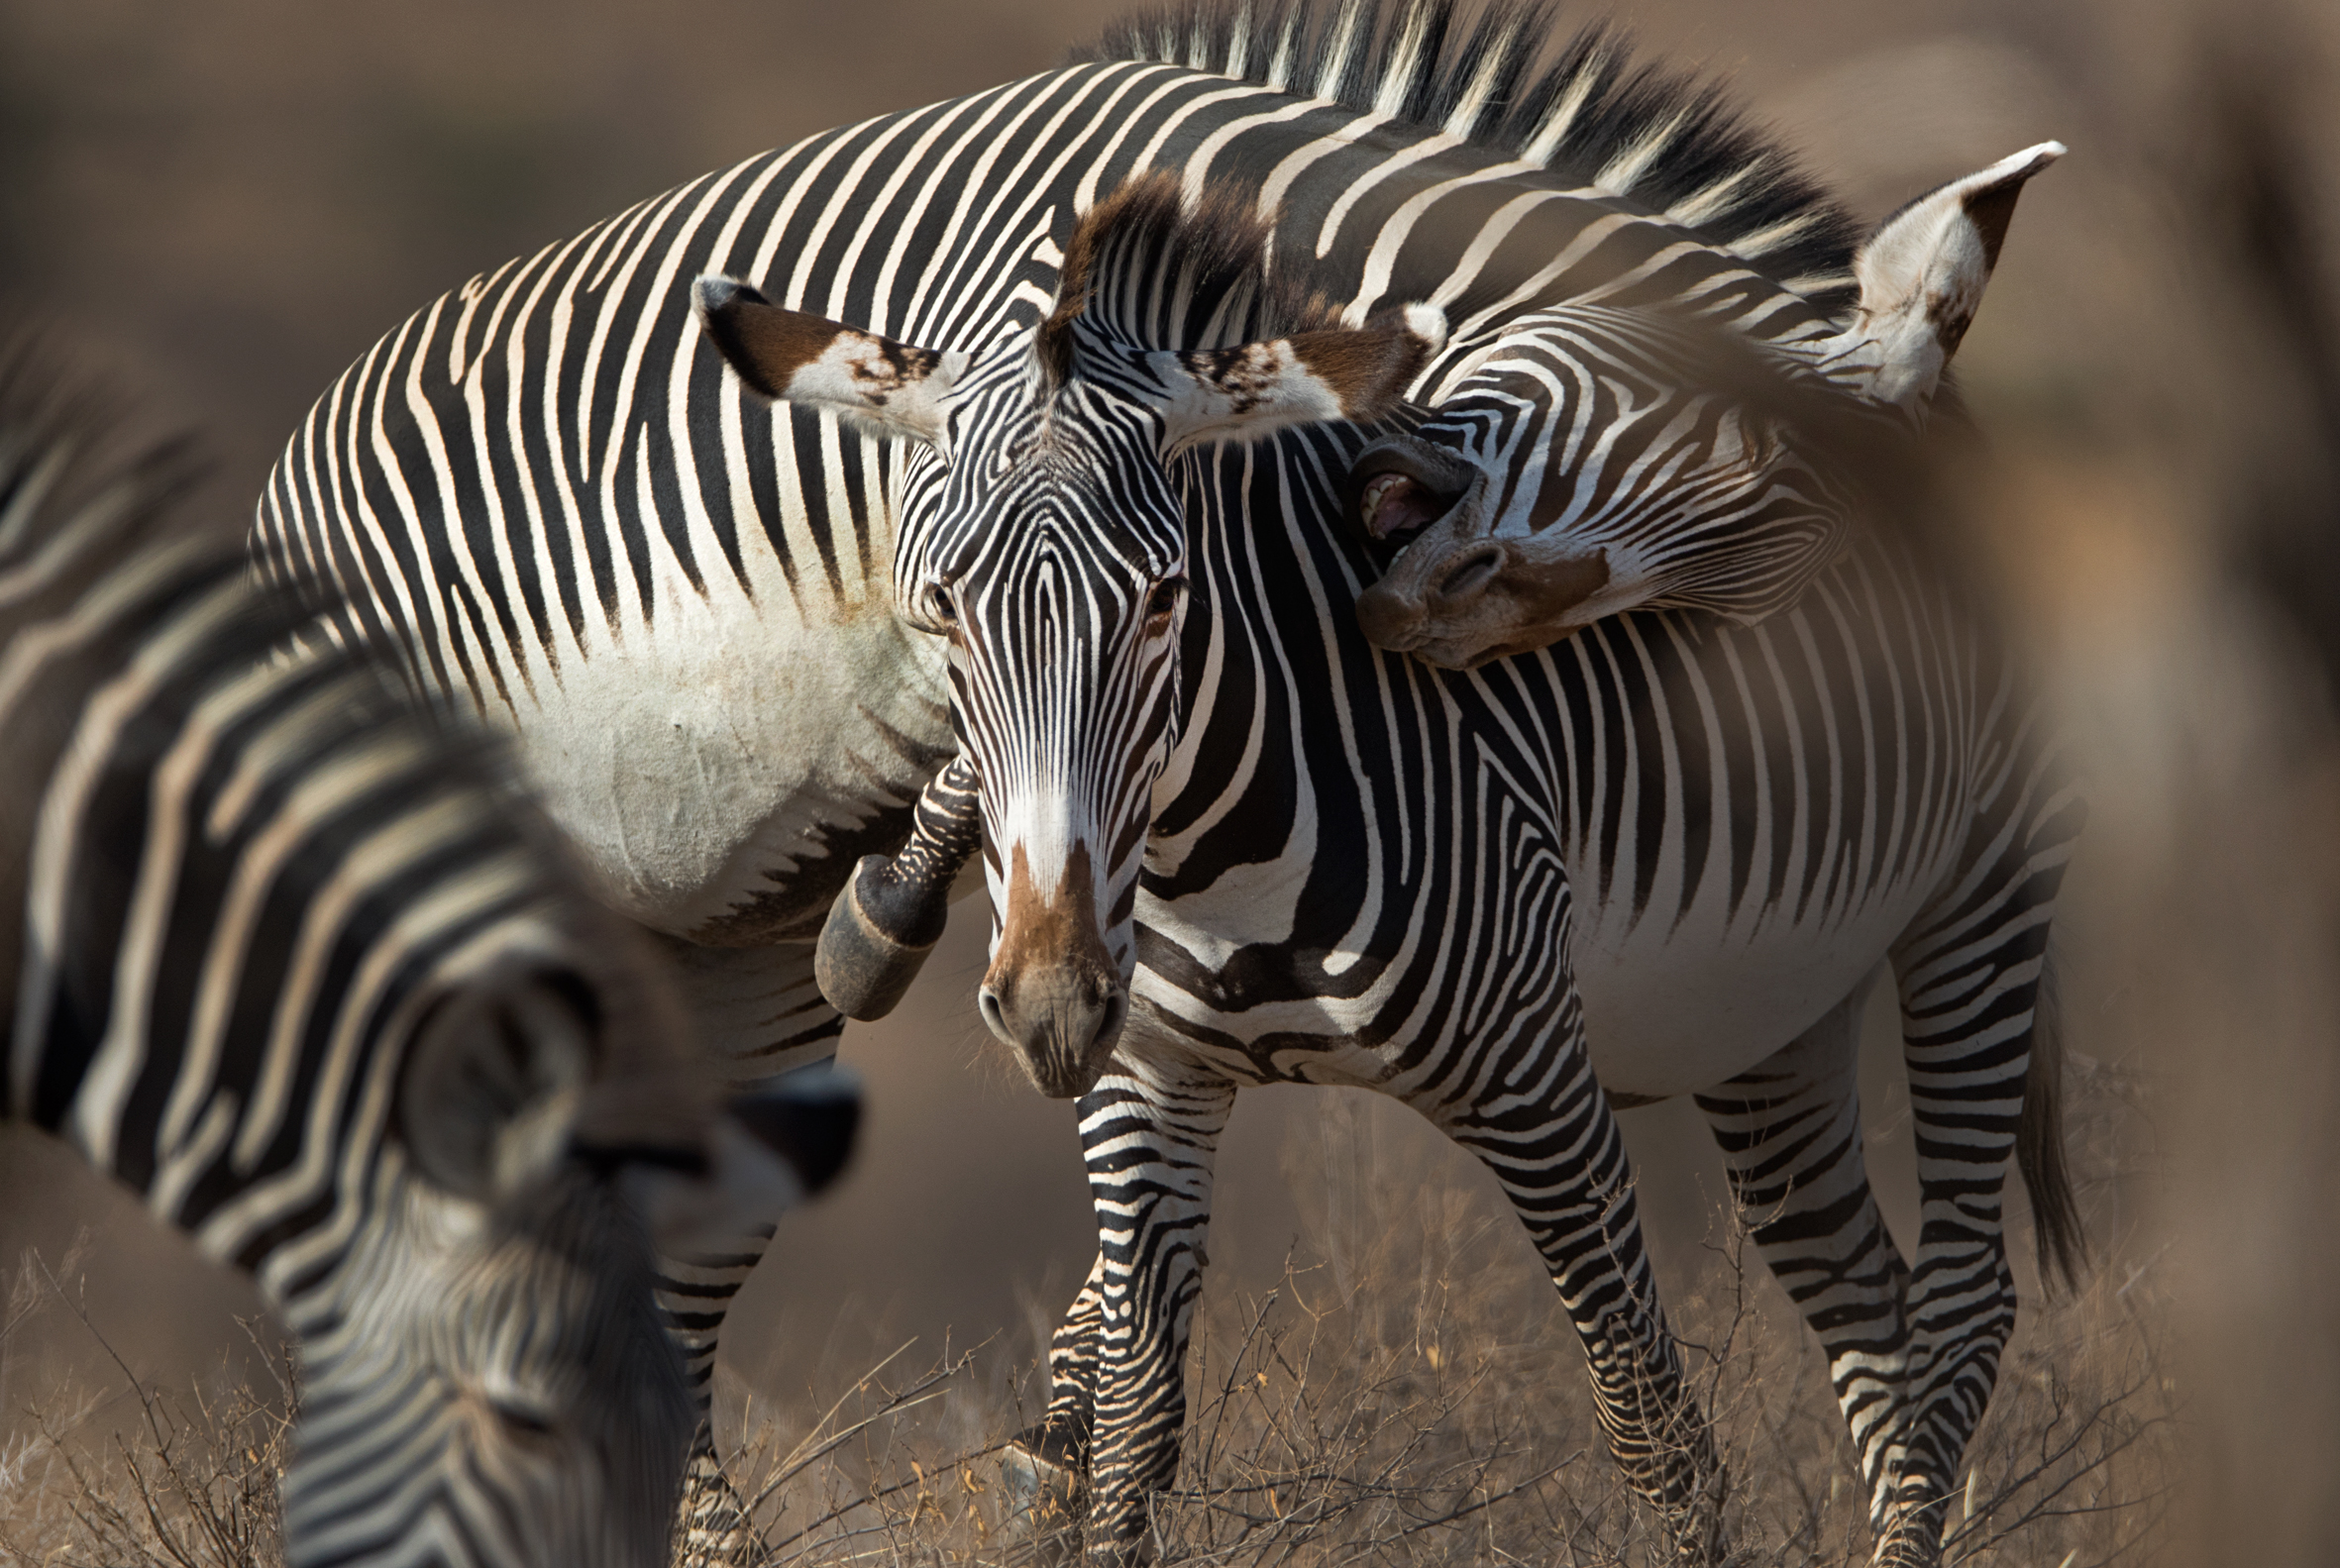 Two zebras fighting